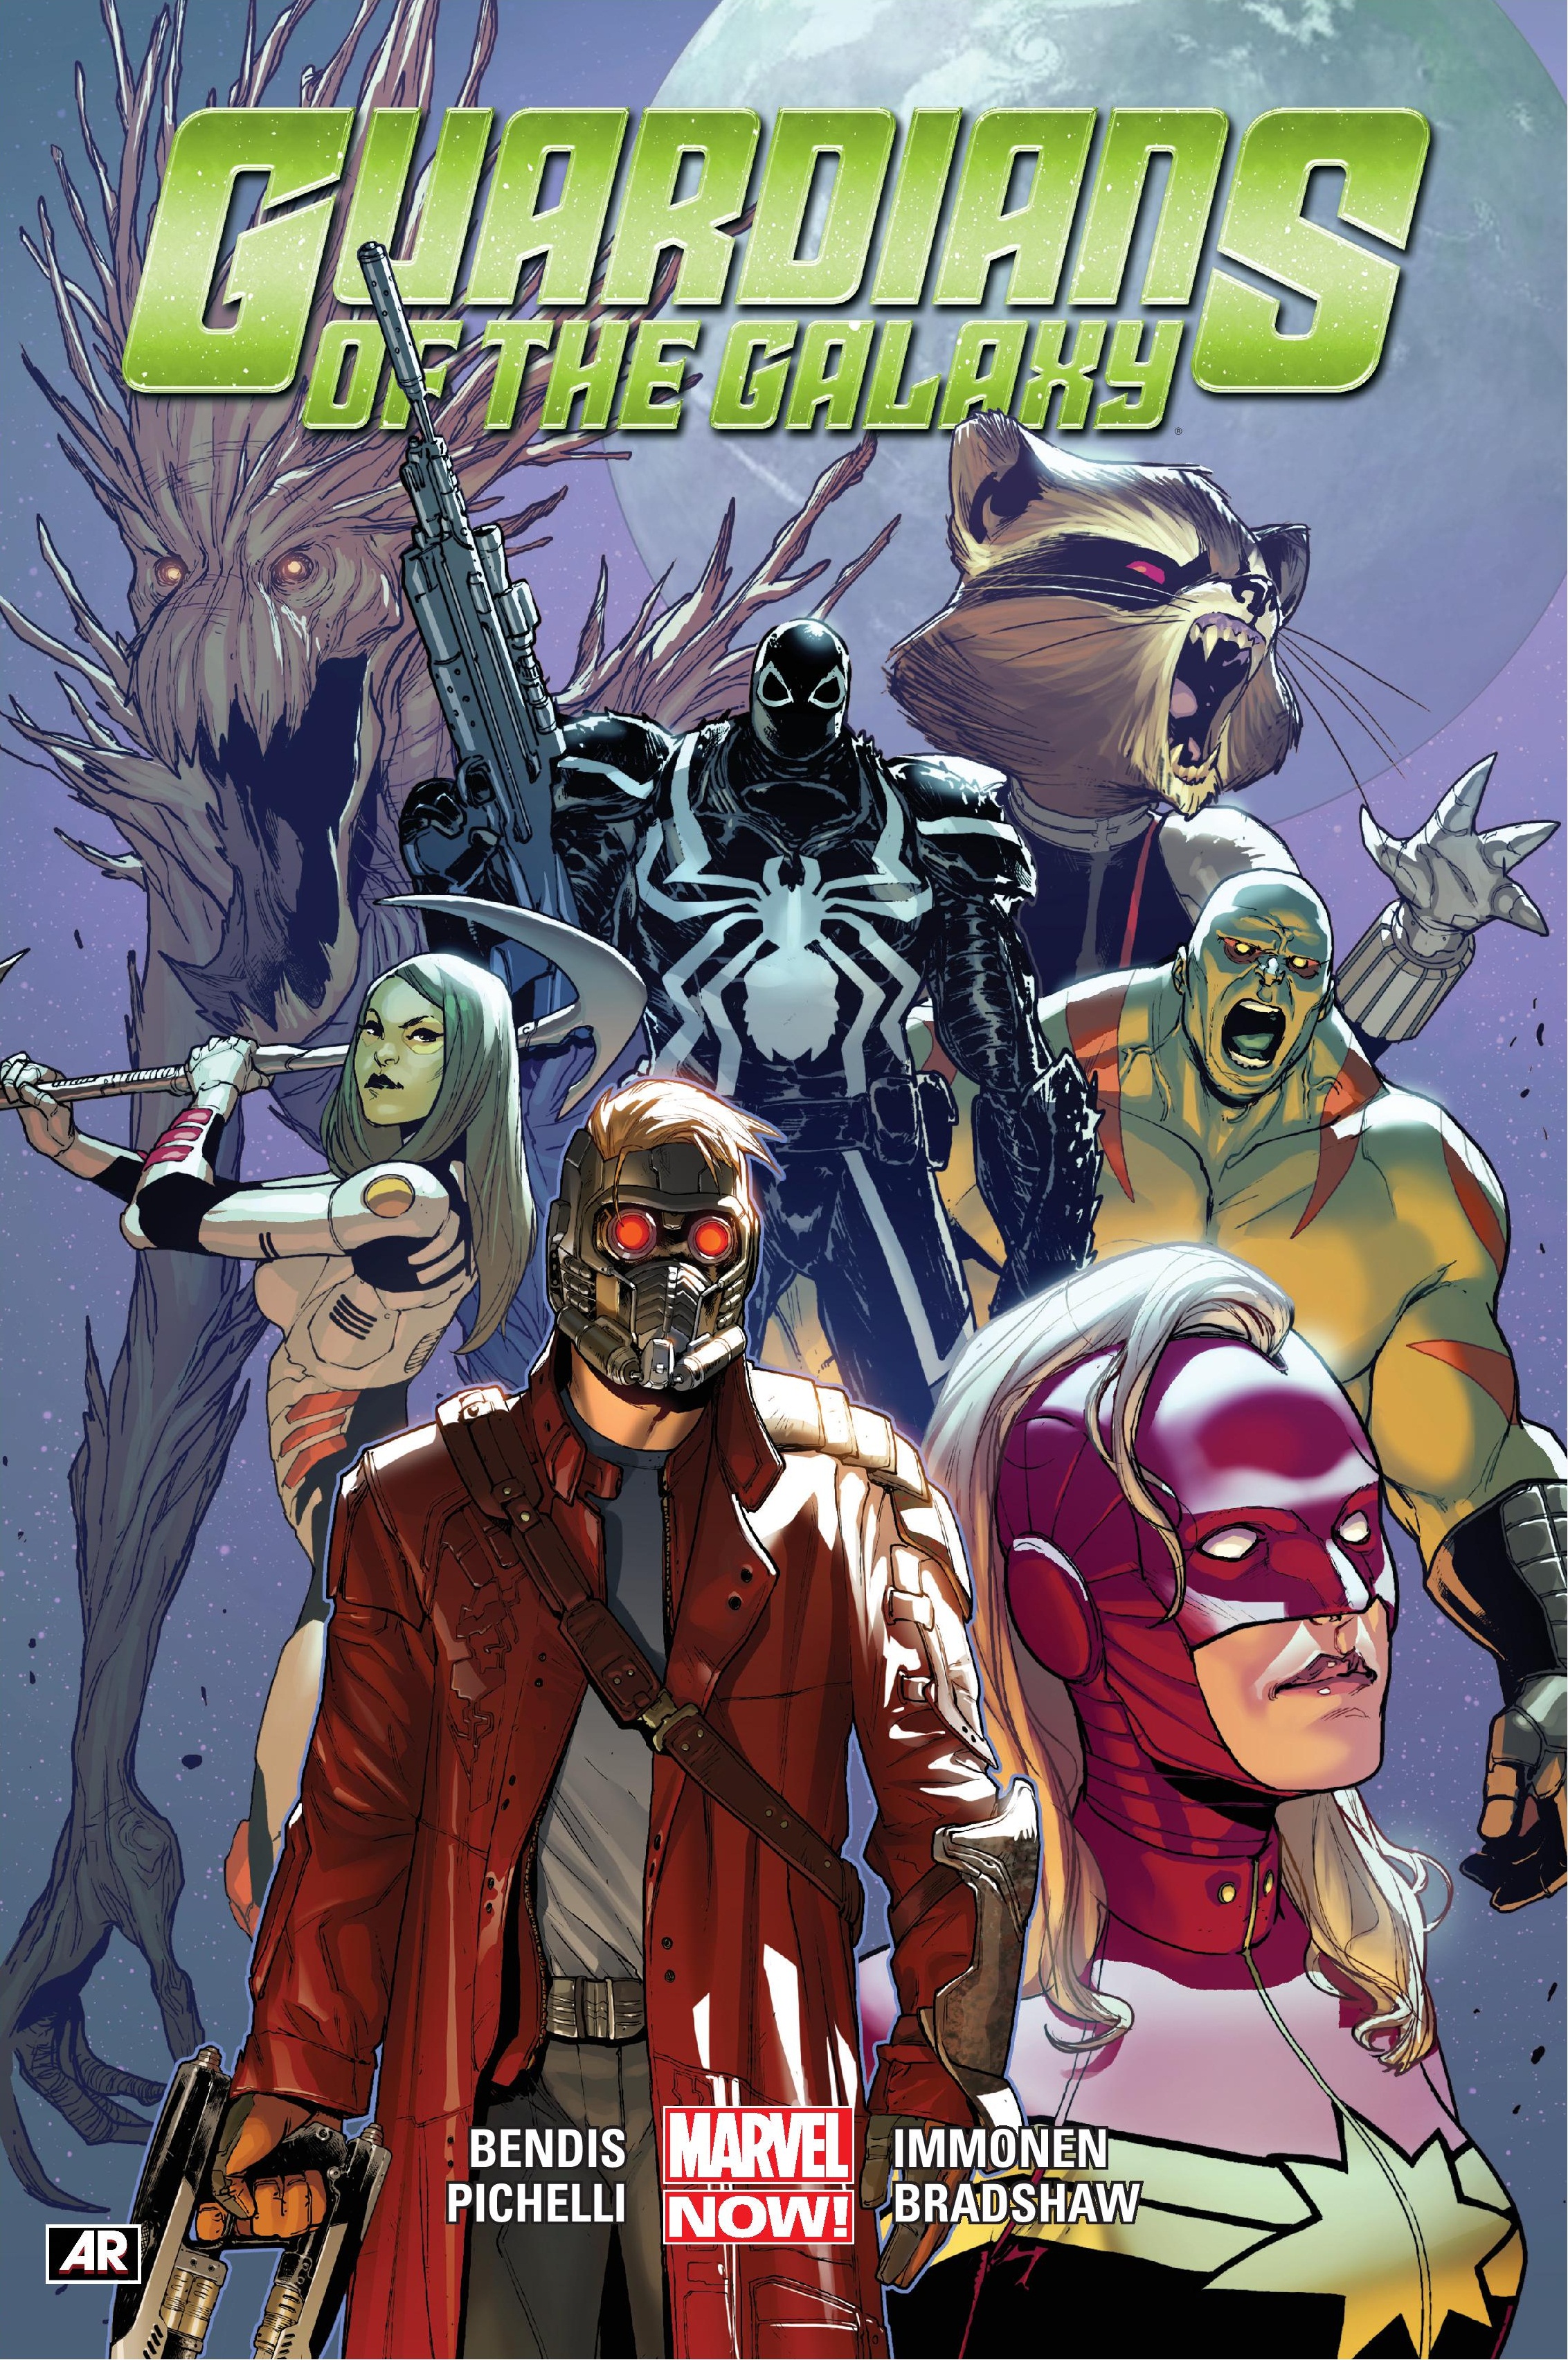 Vol 3 #7A Comic Book Marvel Guardians of the Galaxy